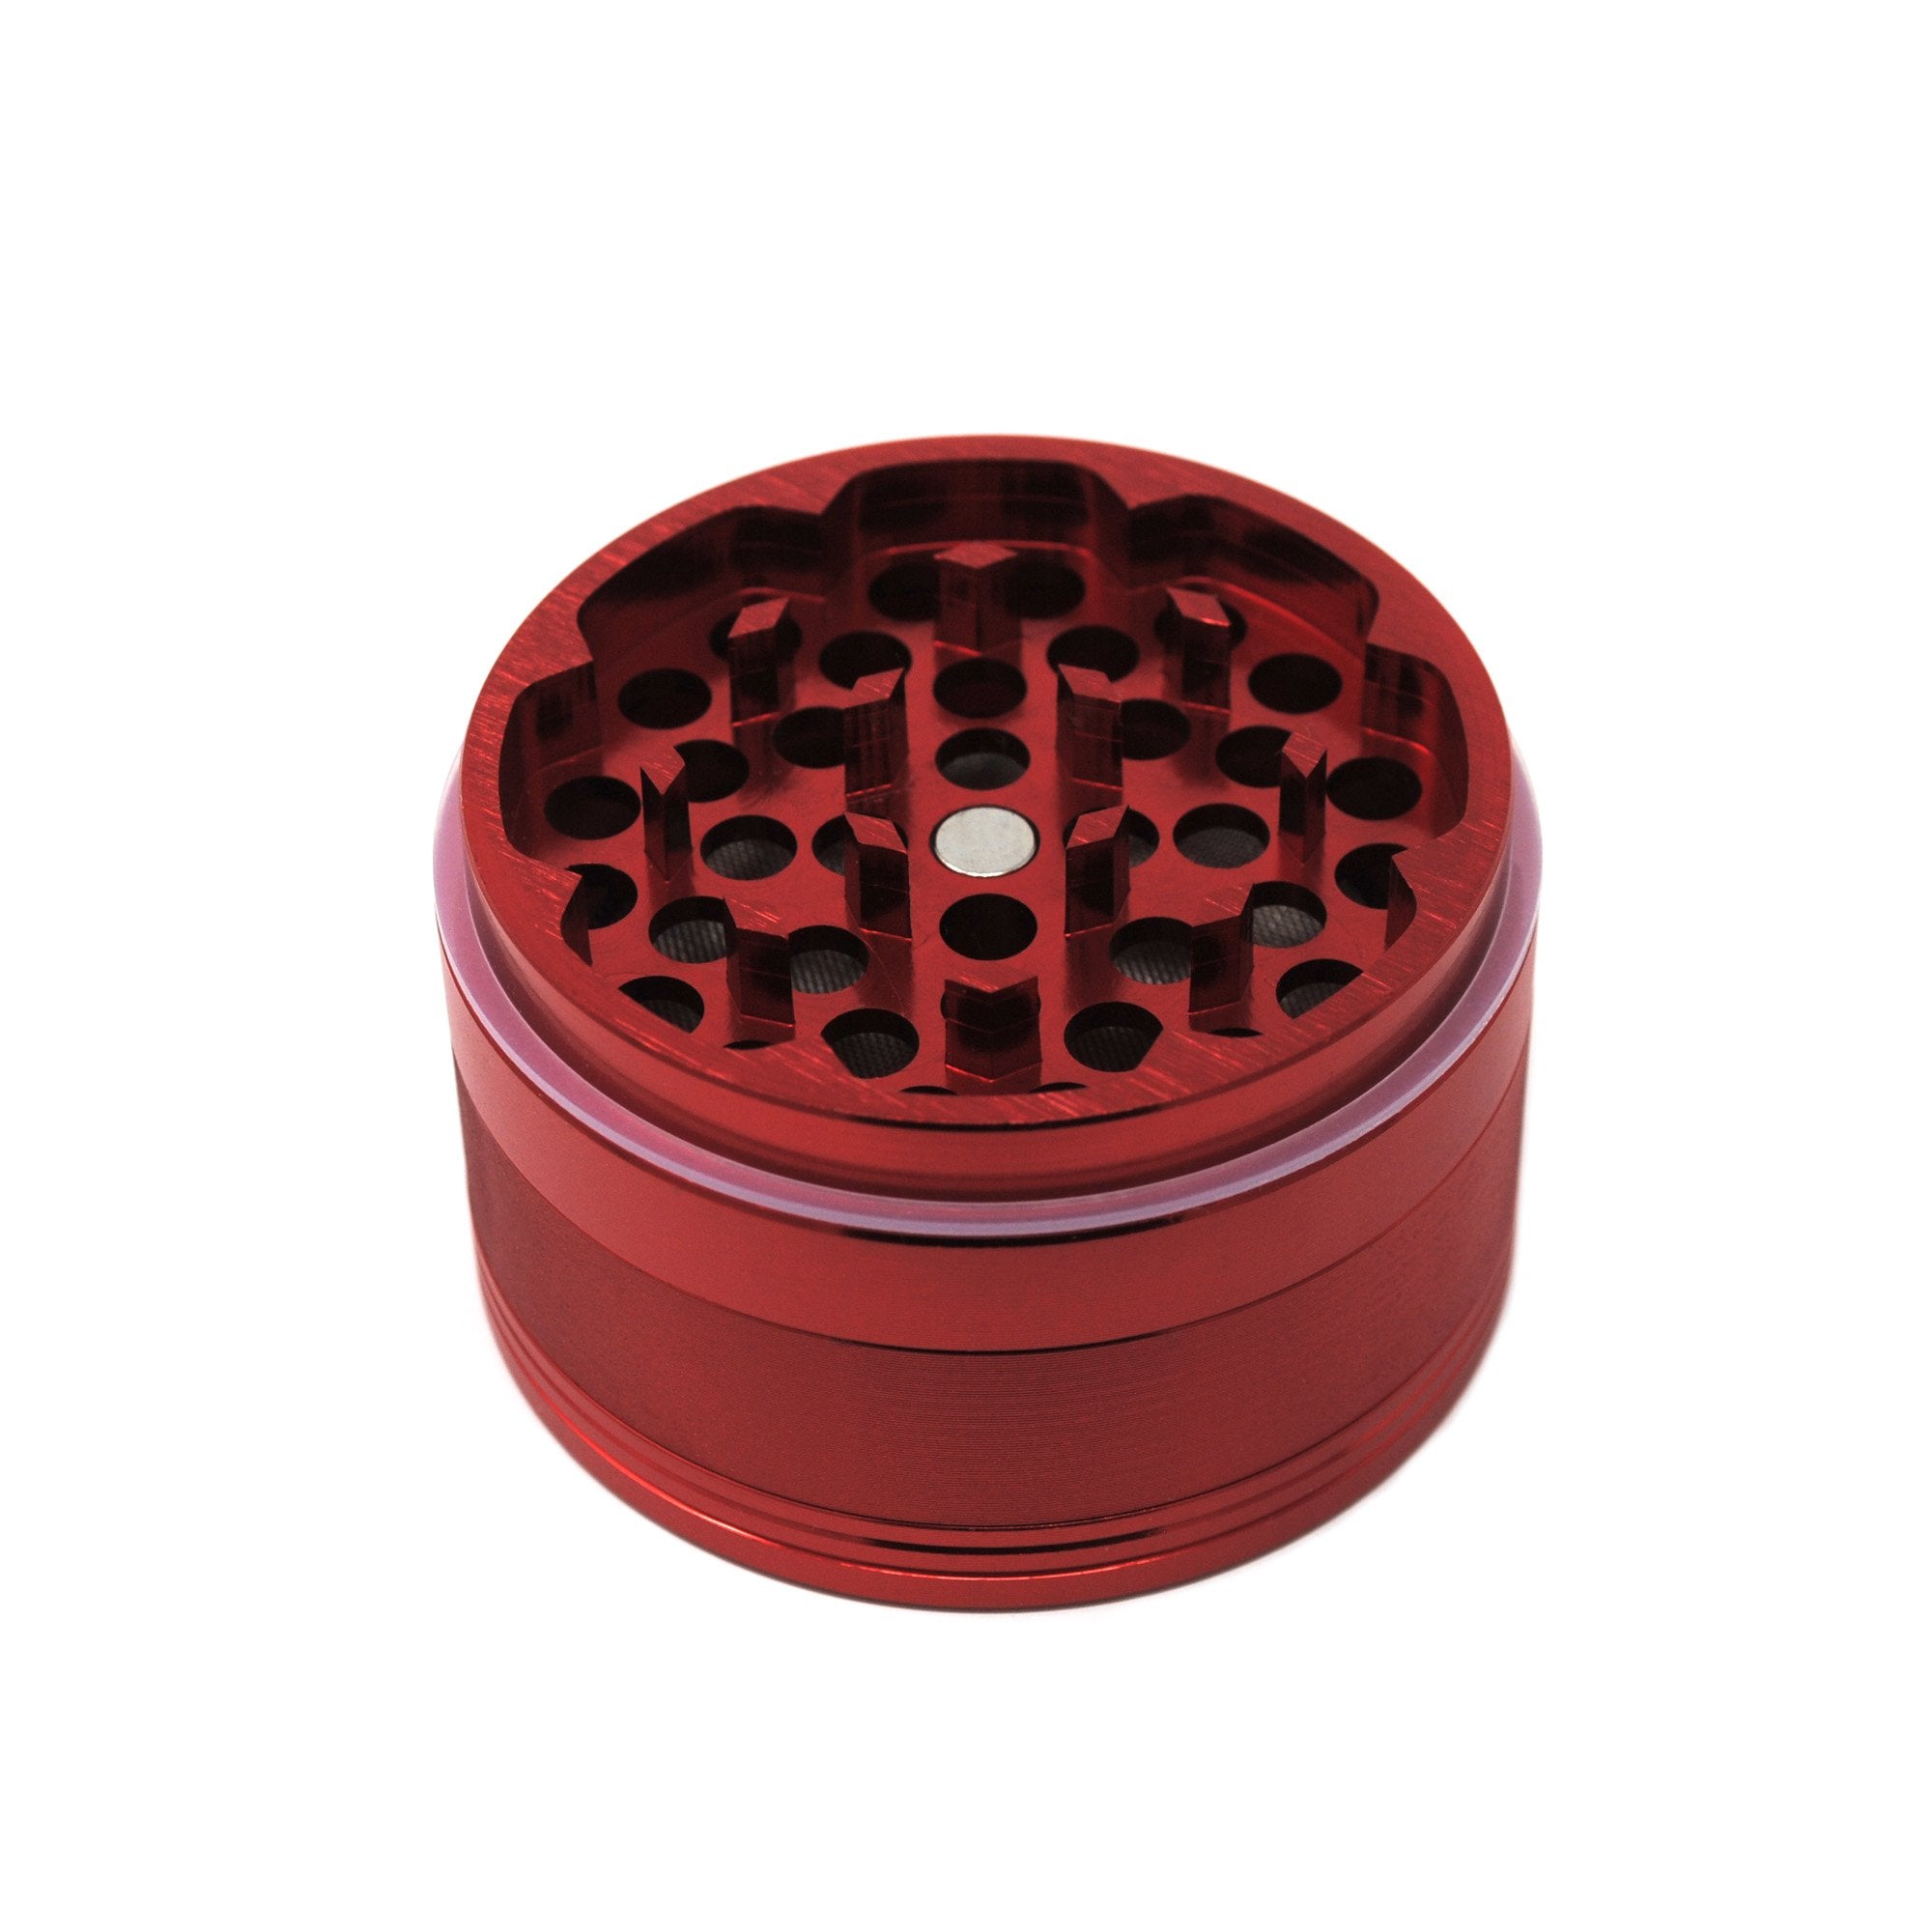 Cali Crusher®: 2.5" 4 Piece Hard Top Grinder - Red